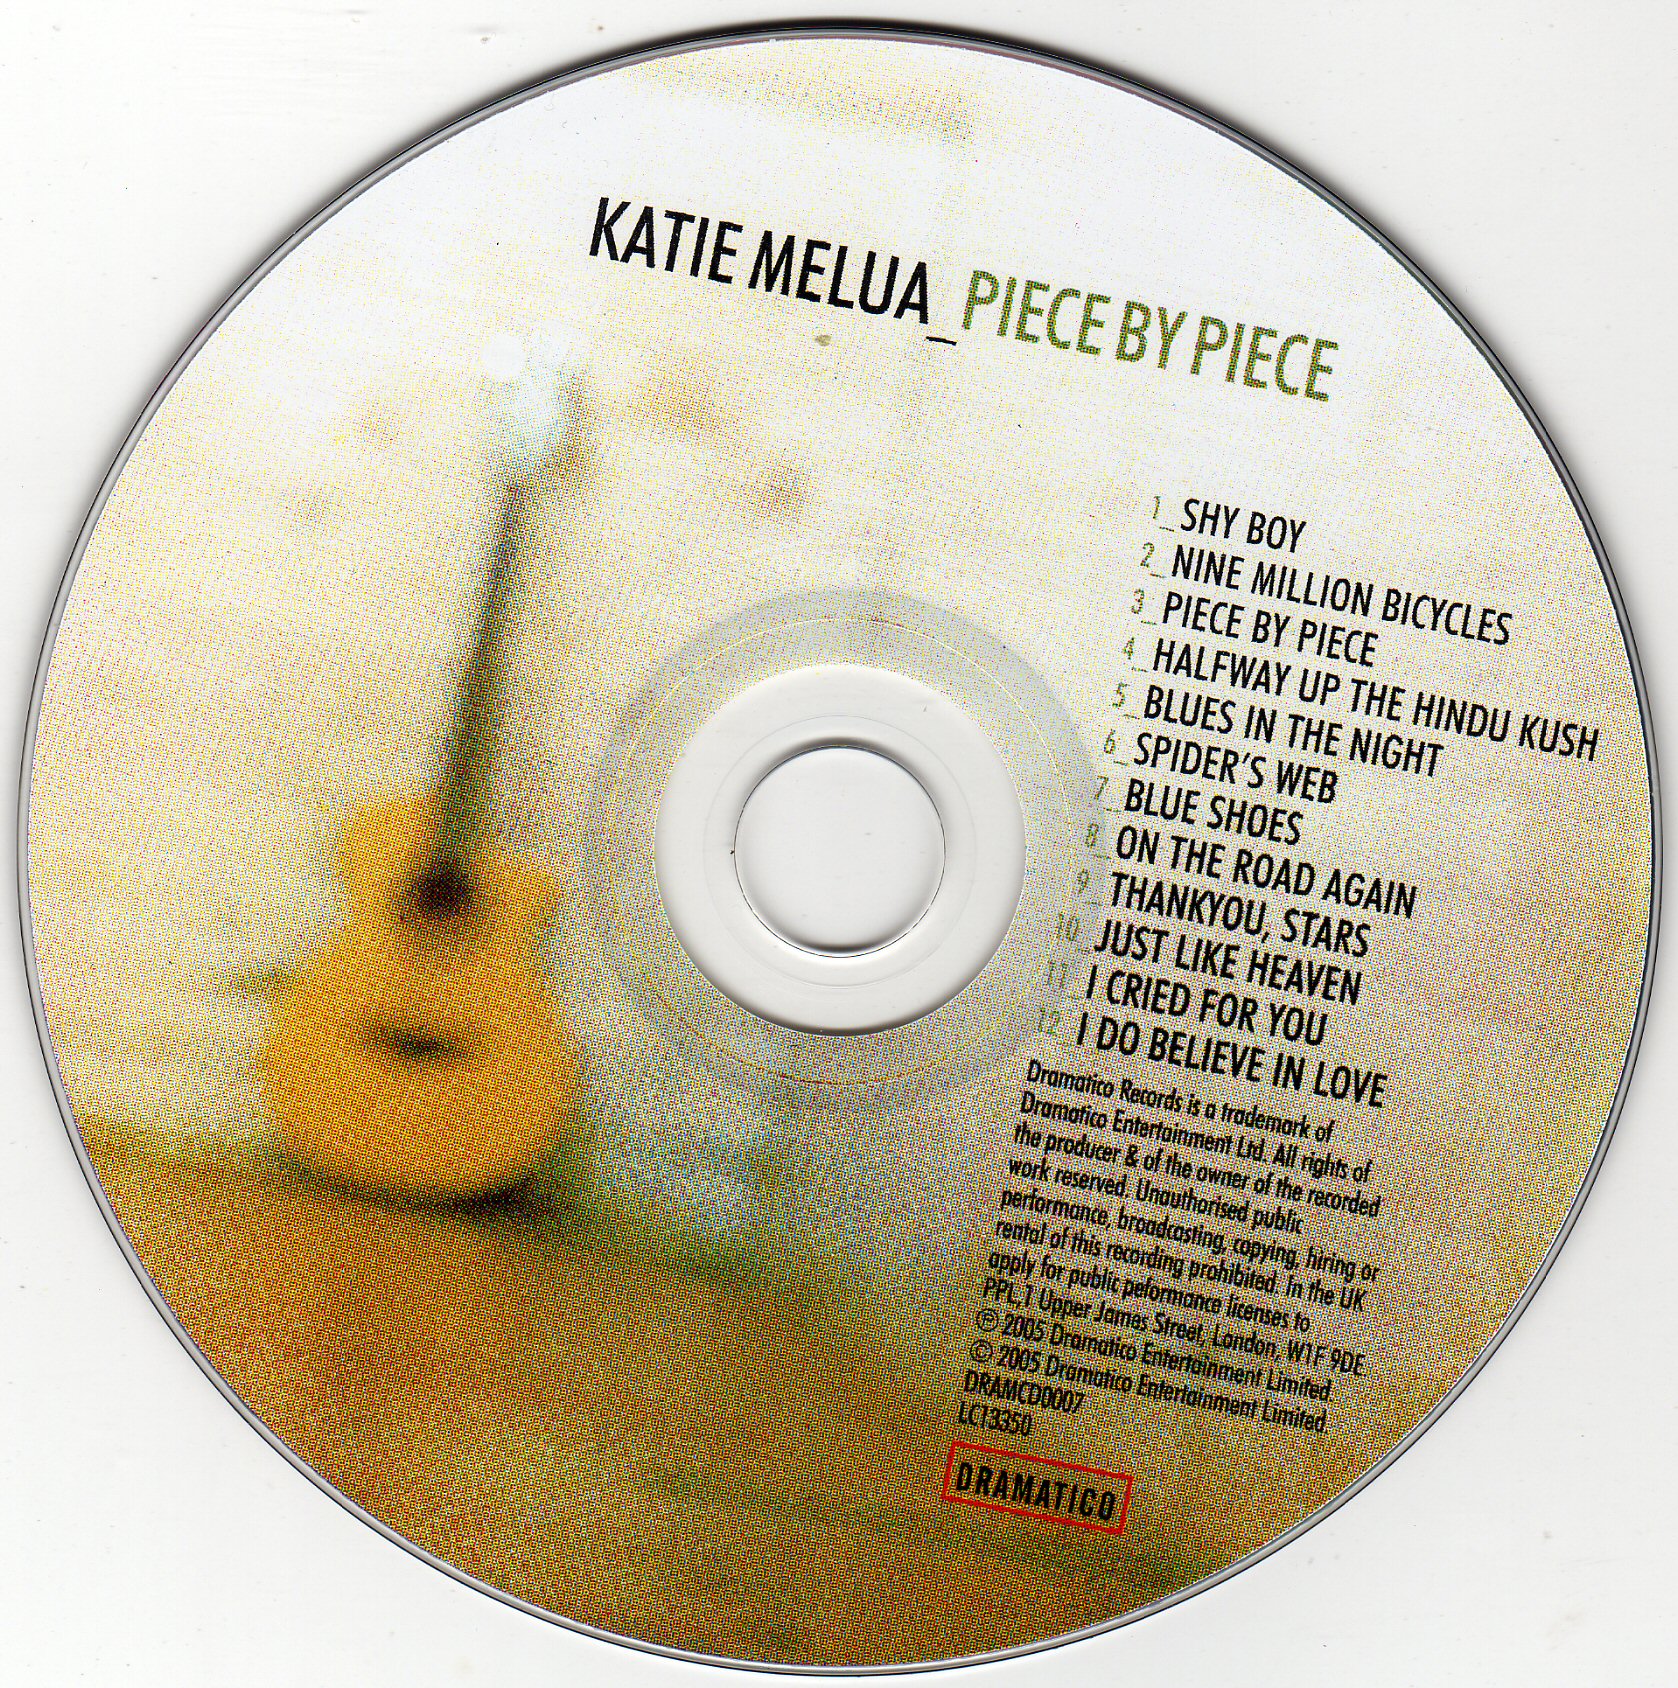 Wonderful life melua. Katie Melua 2005 piece by piece. Katie Melua piece by piece 2005 обложка для компакт диска. Piece by piece. Katie Melua wonderful Life.